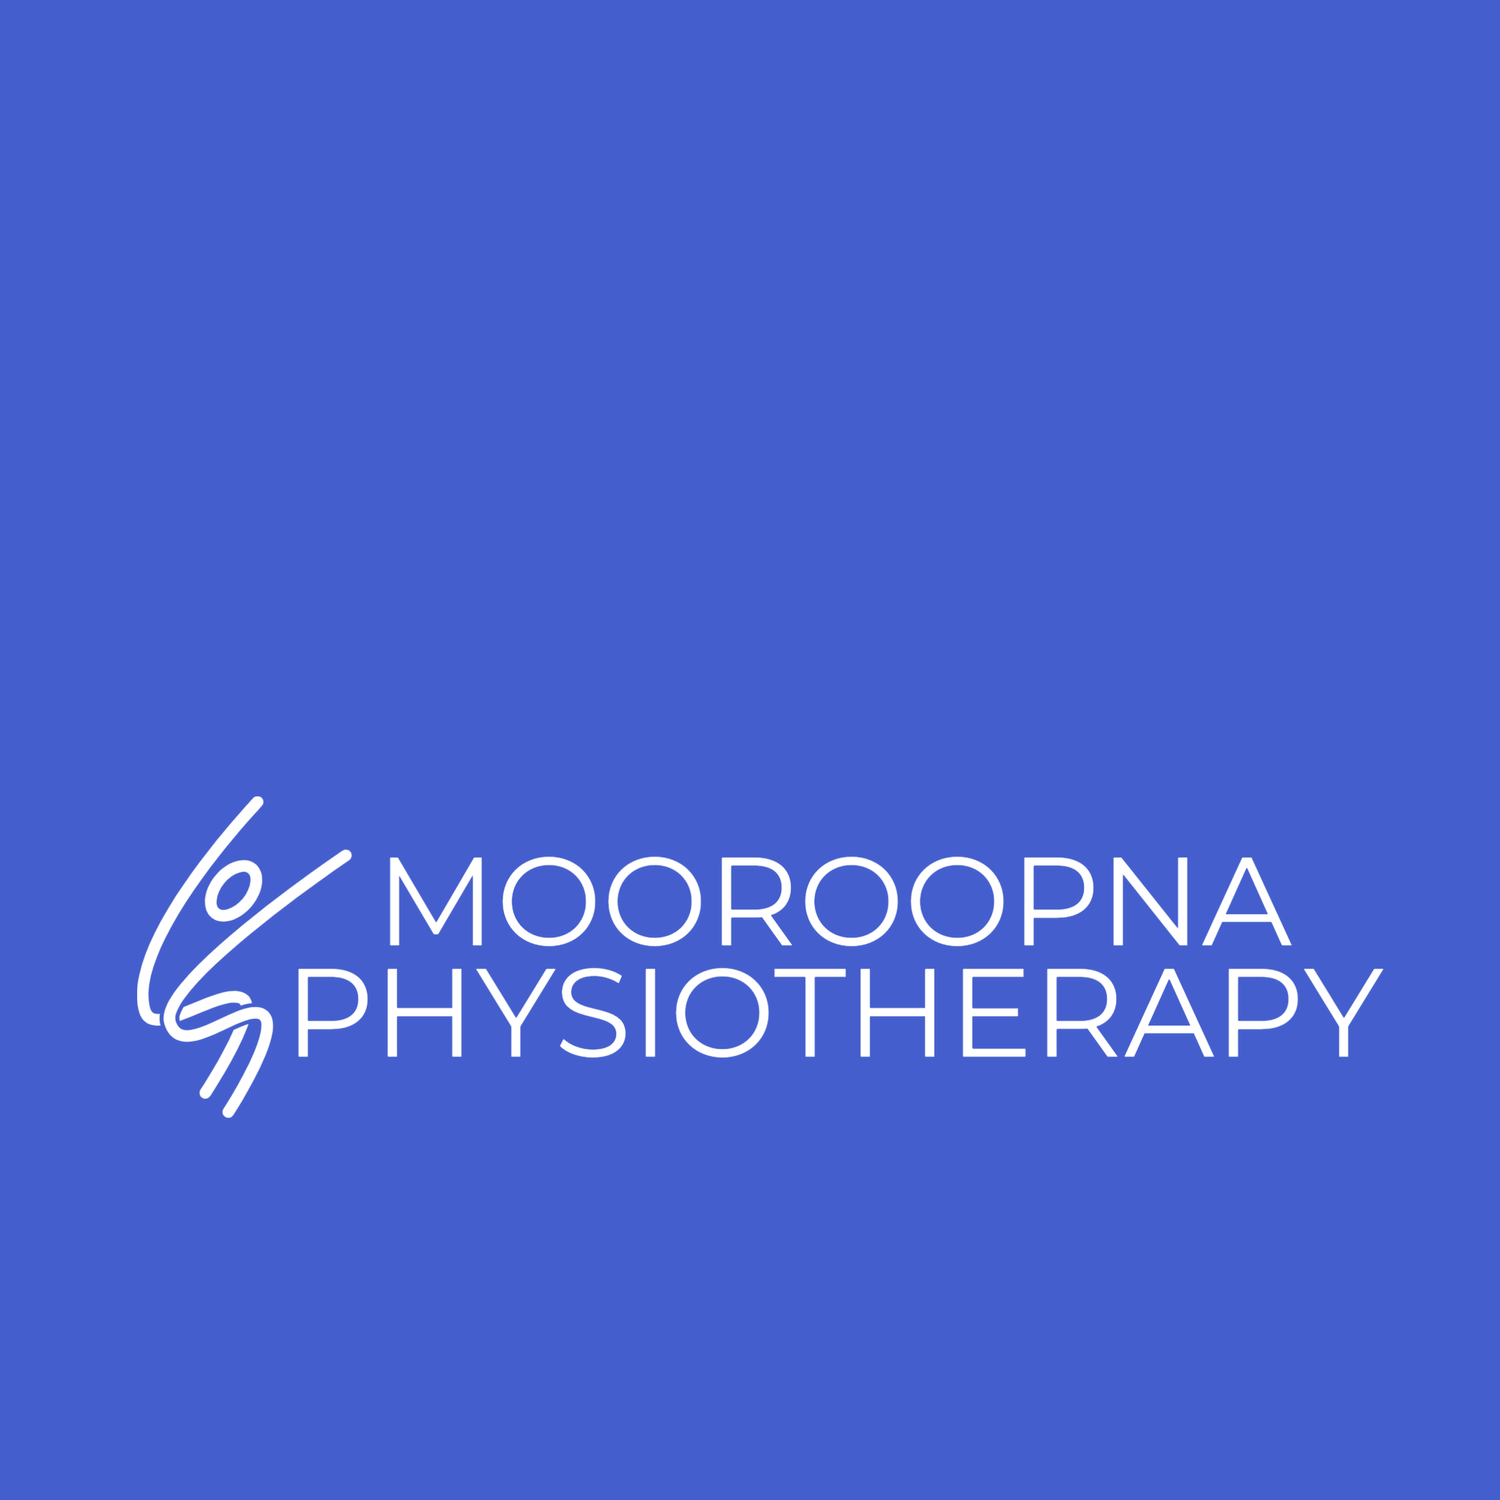 MOOROOPNA PHYSIOTHERAPY